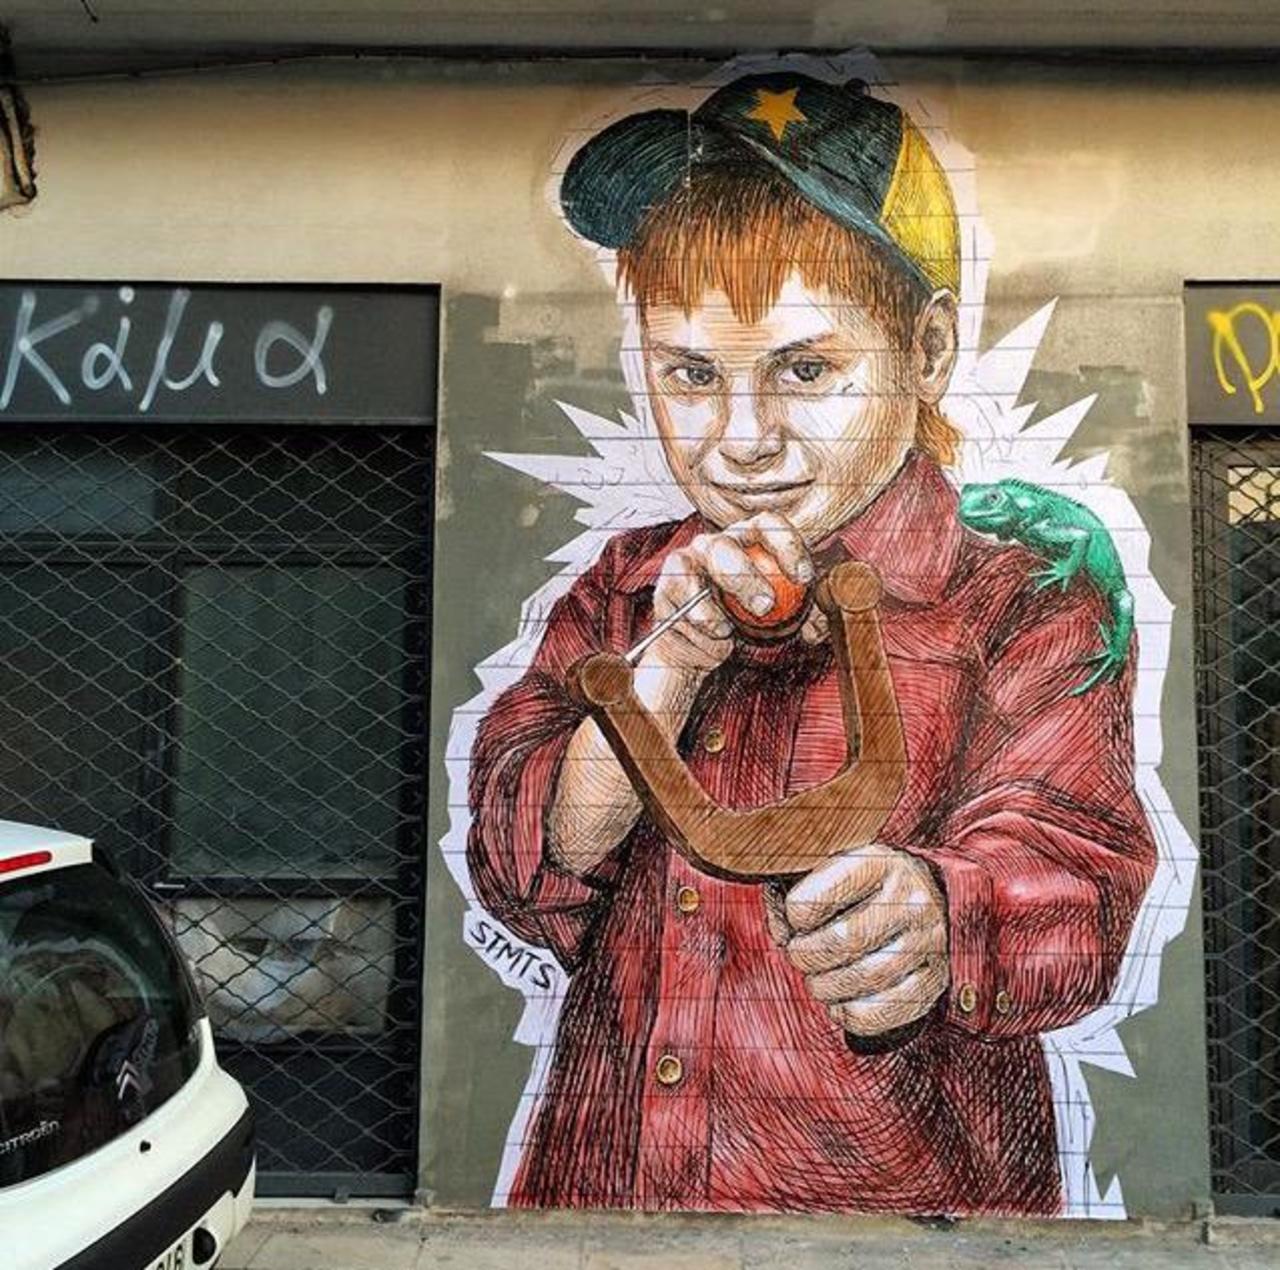 Street Art by STMTS in Athens

#art #graffiti #mural #streetart http://t.co/frq9TyTx11